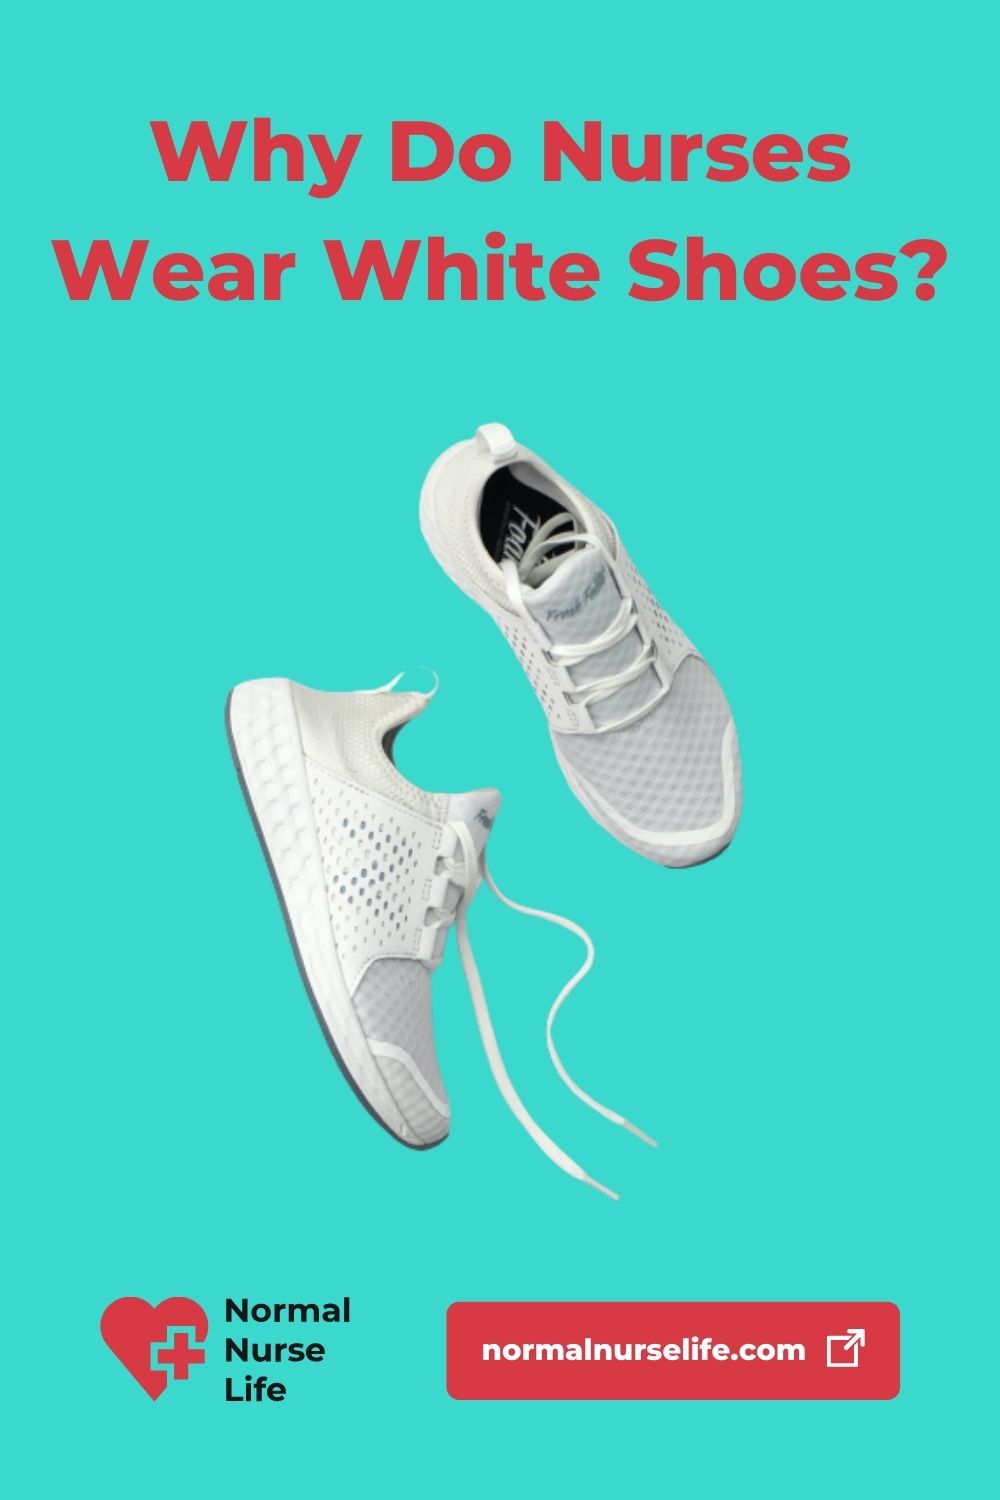 Why do nurses wear white shoes